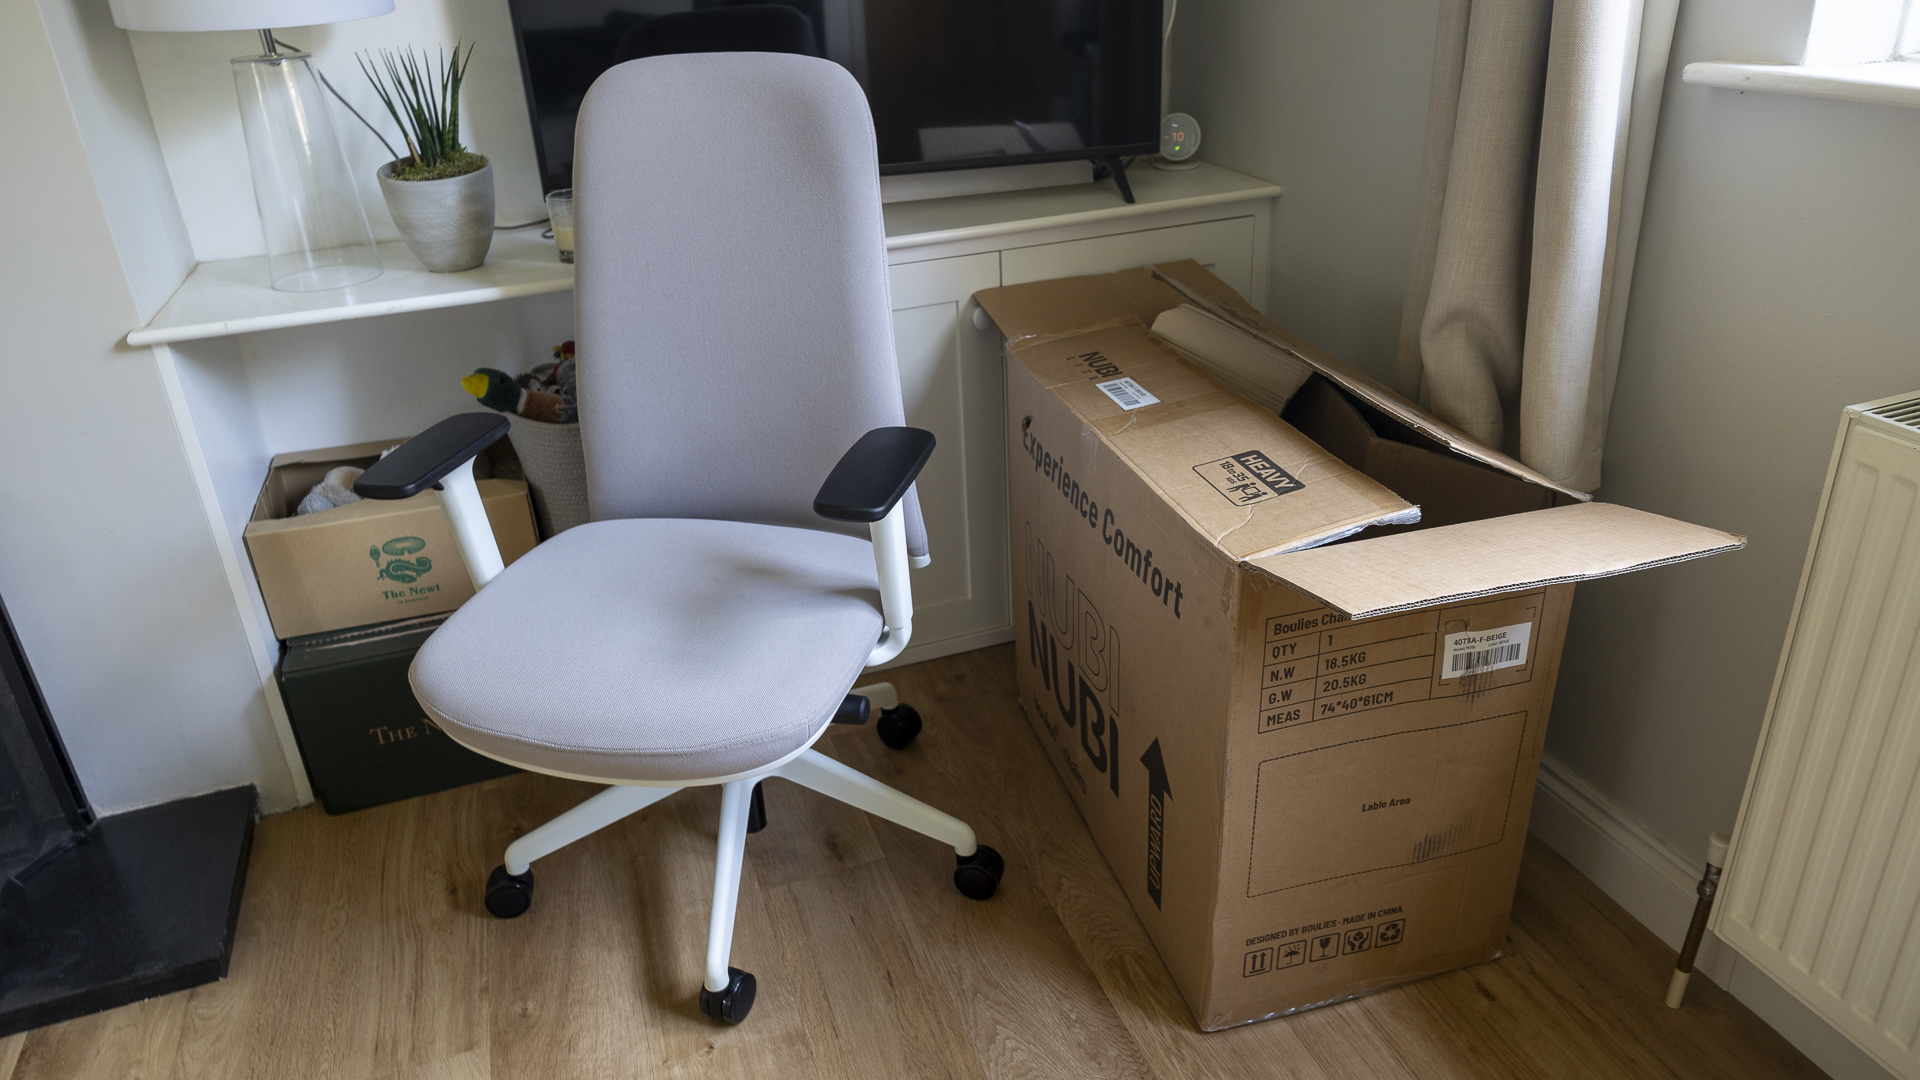 The Boulies NUBI Series chair next to the box